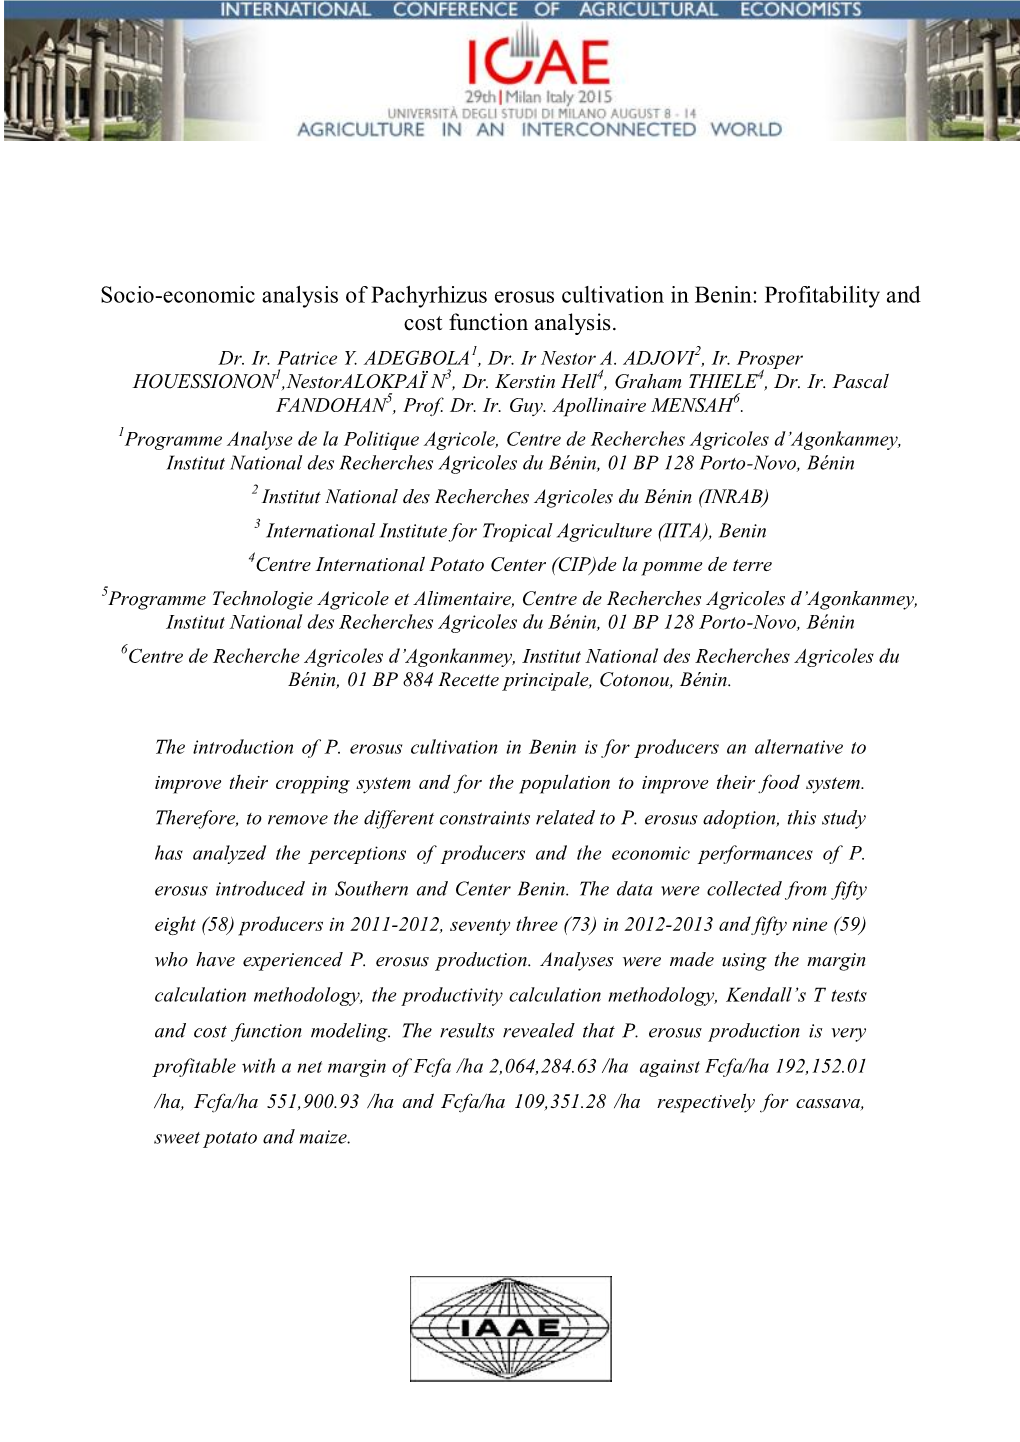 Socio-Economic Analysis of Pachyrhizus Erosus Cultivation in Benin: Profitability and Cost Function Analysis